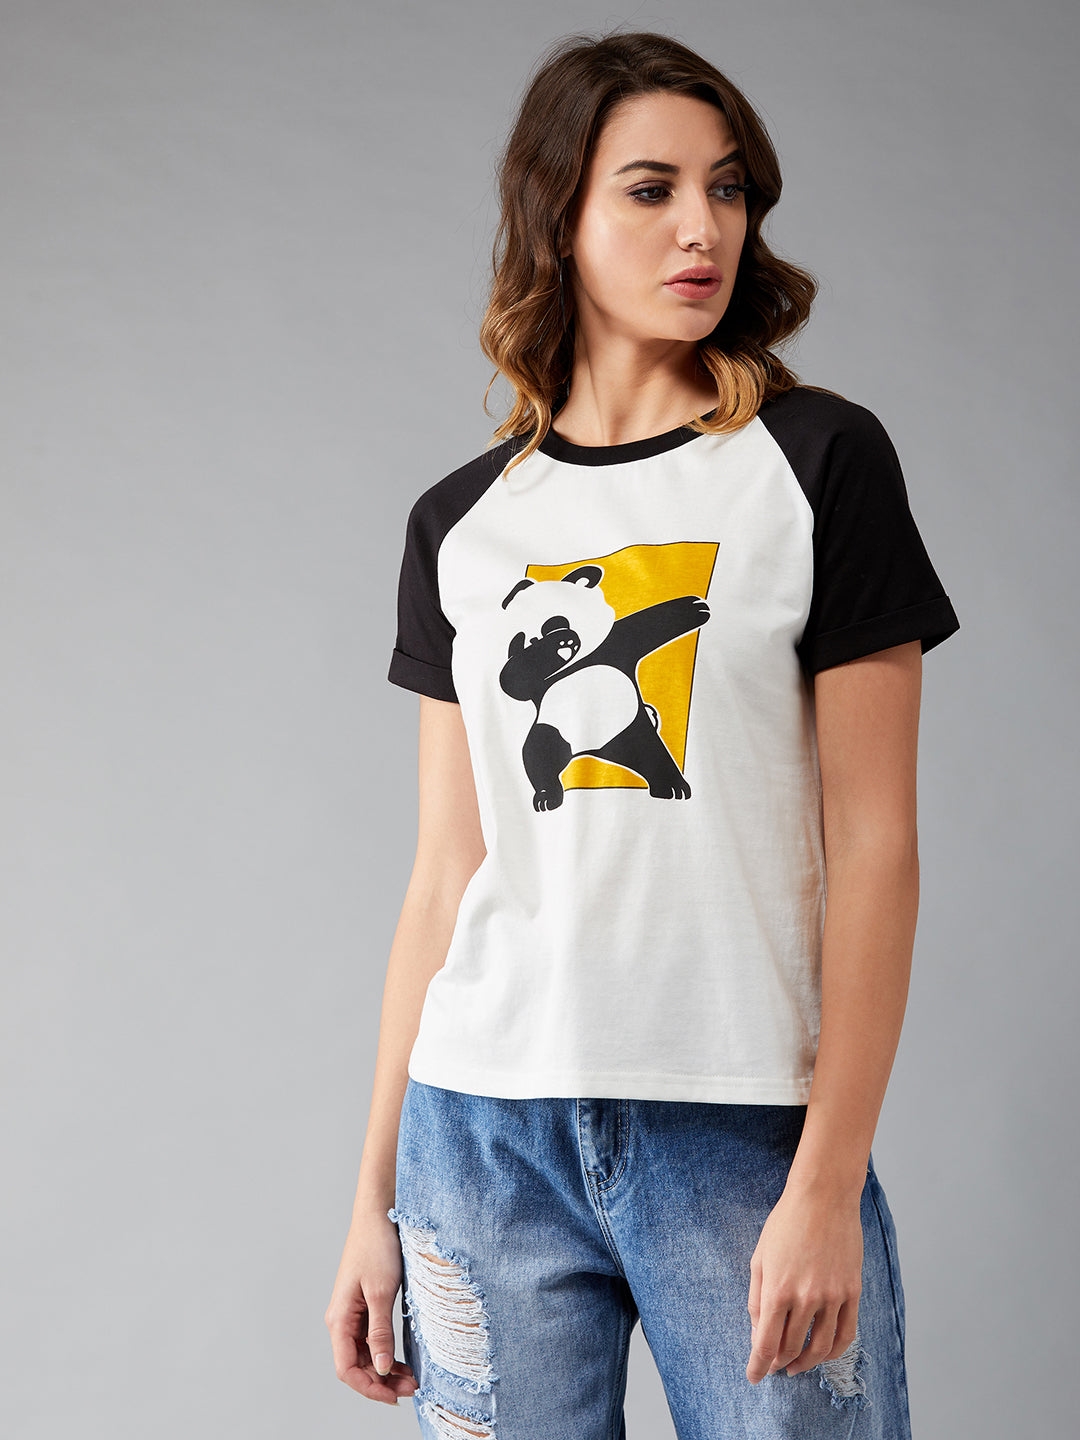 MISS CHASE | White and Black Round Neck Short Sleeve Printed Basic Regular T-Shirt